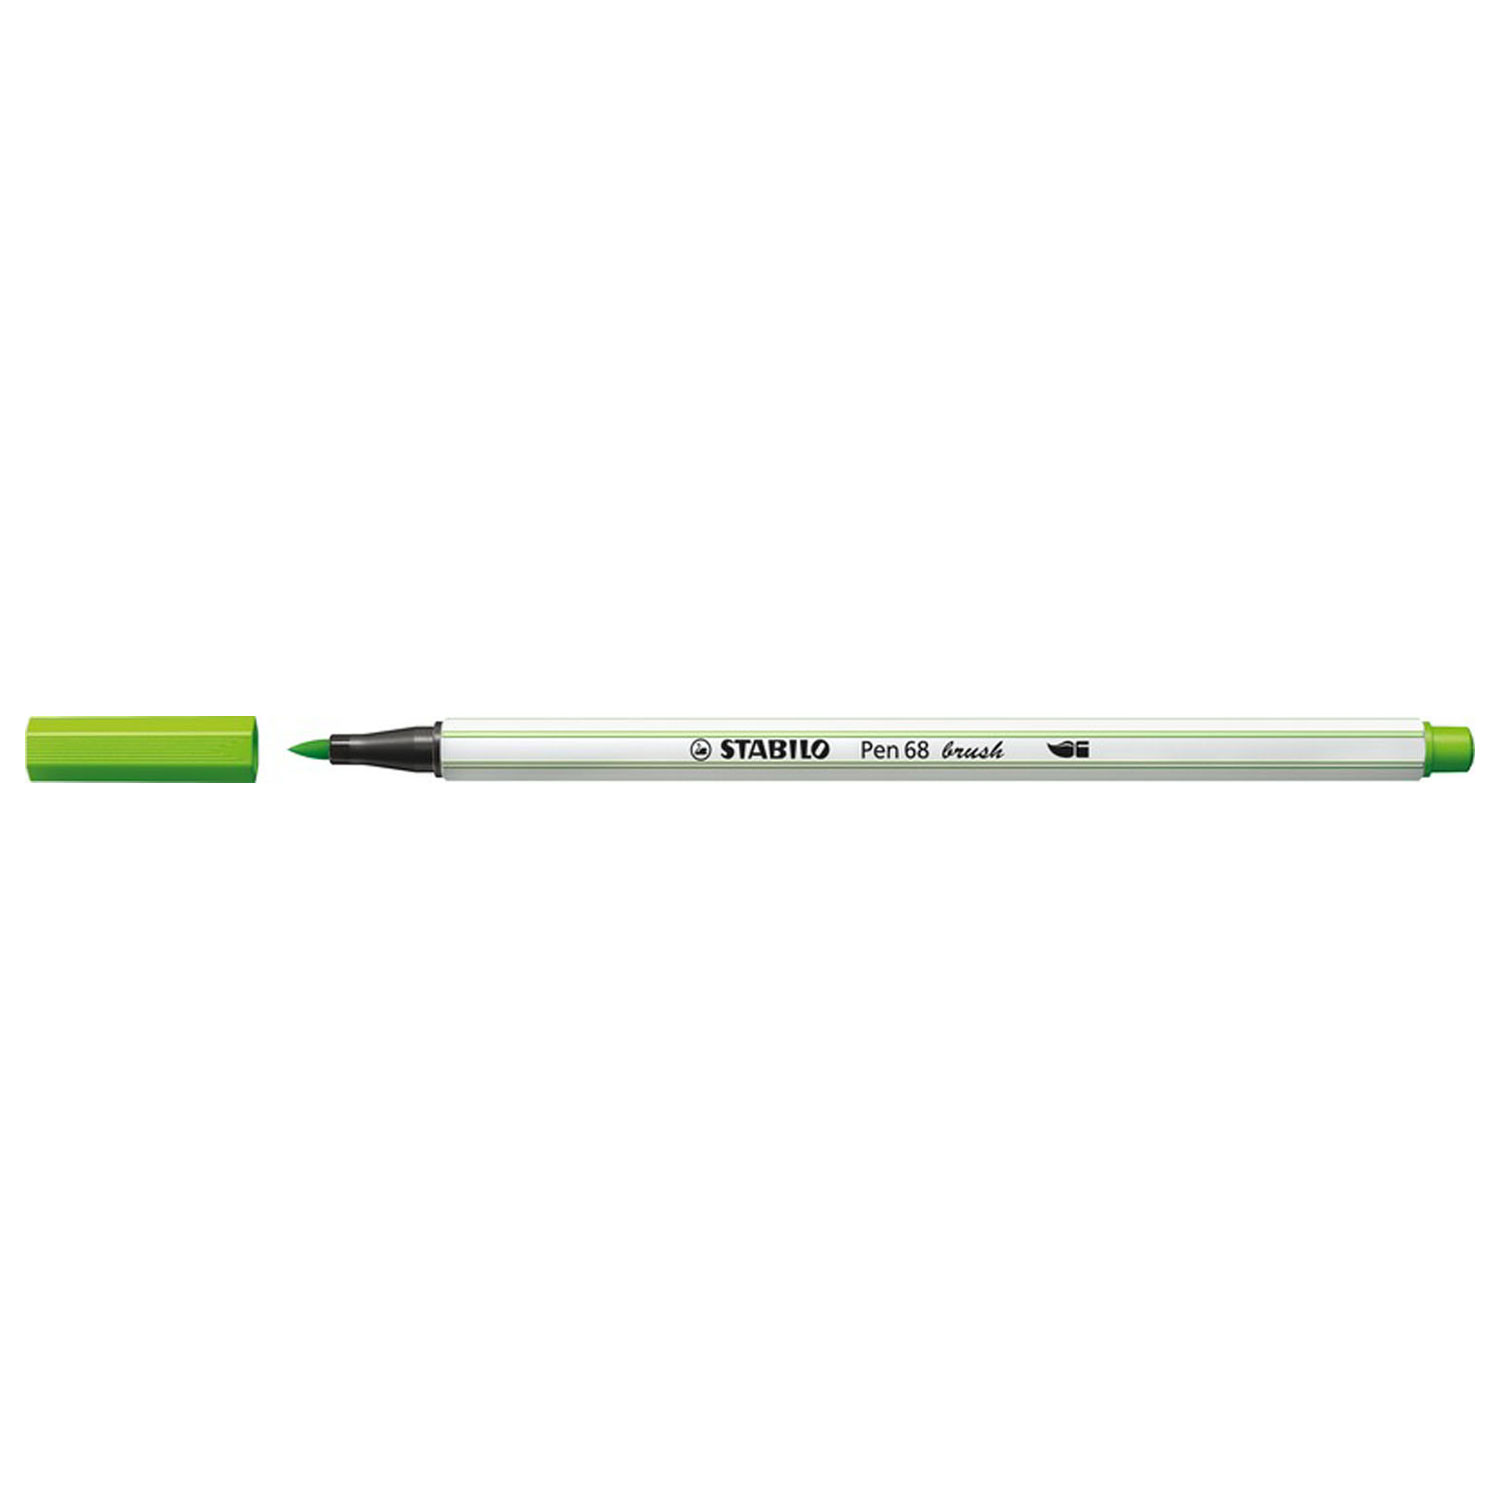 STABILO Pen 68 Brush - Premium Brush Viltstift - Met Flexibele Penseelpunt - Loof Groen - per stuk